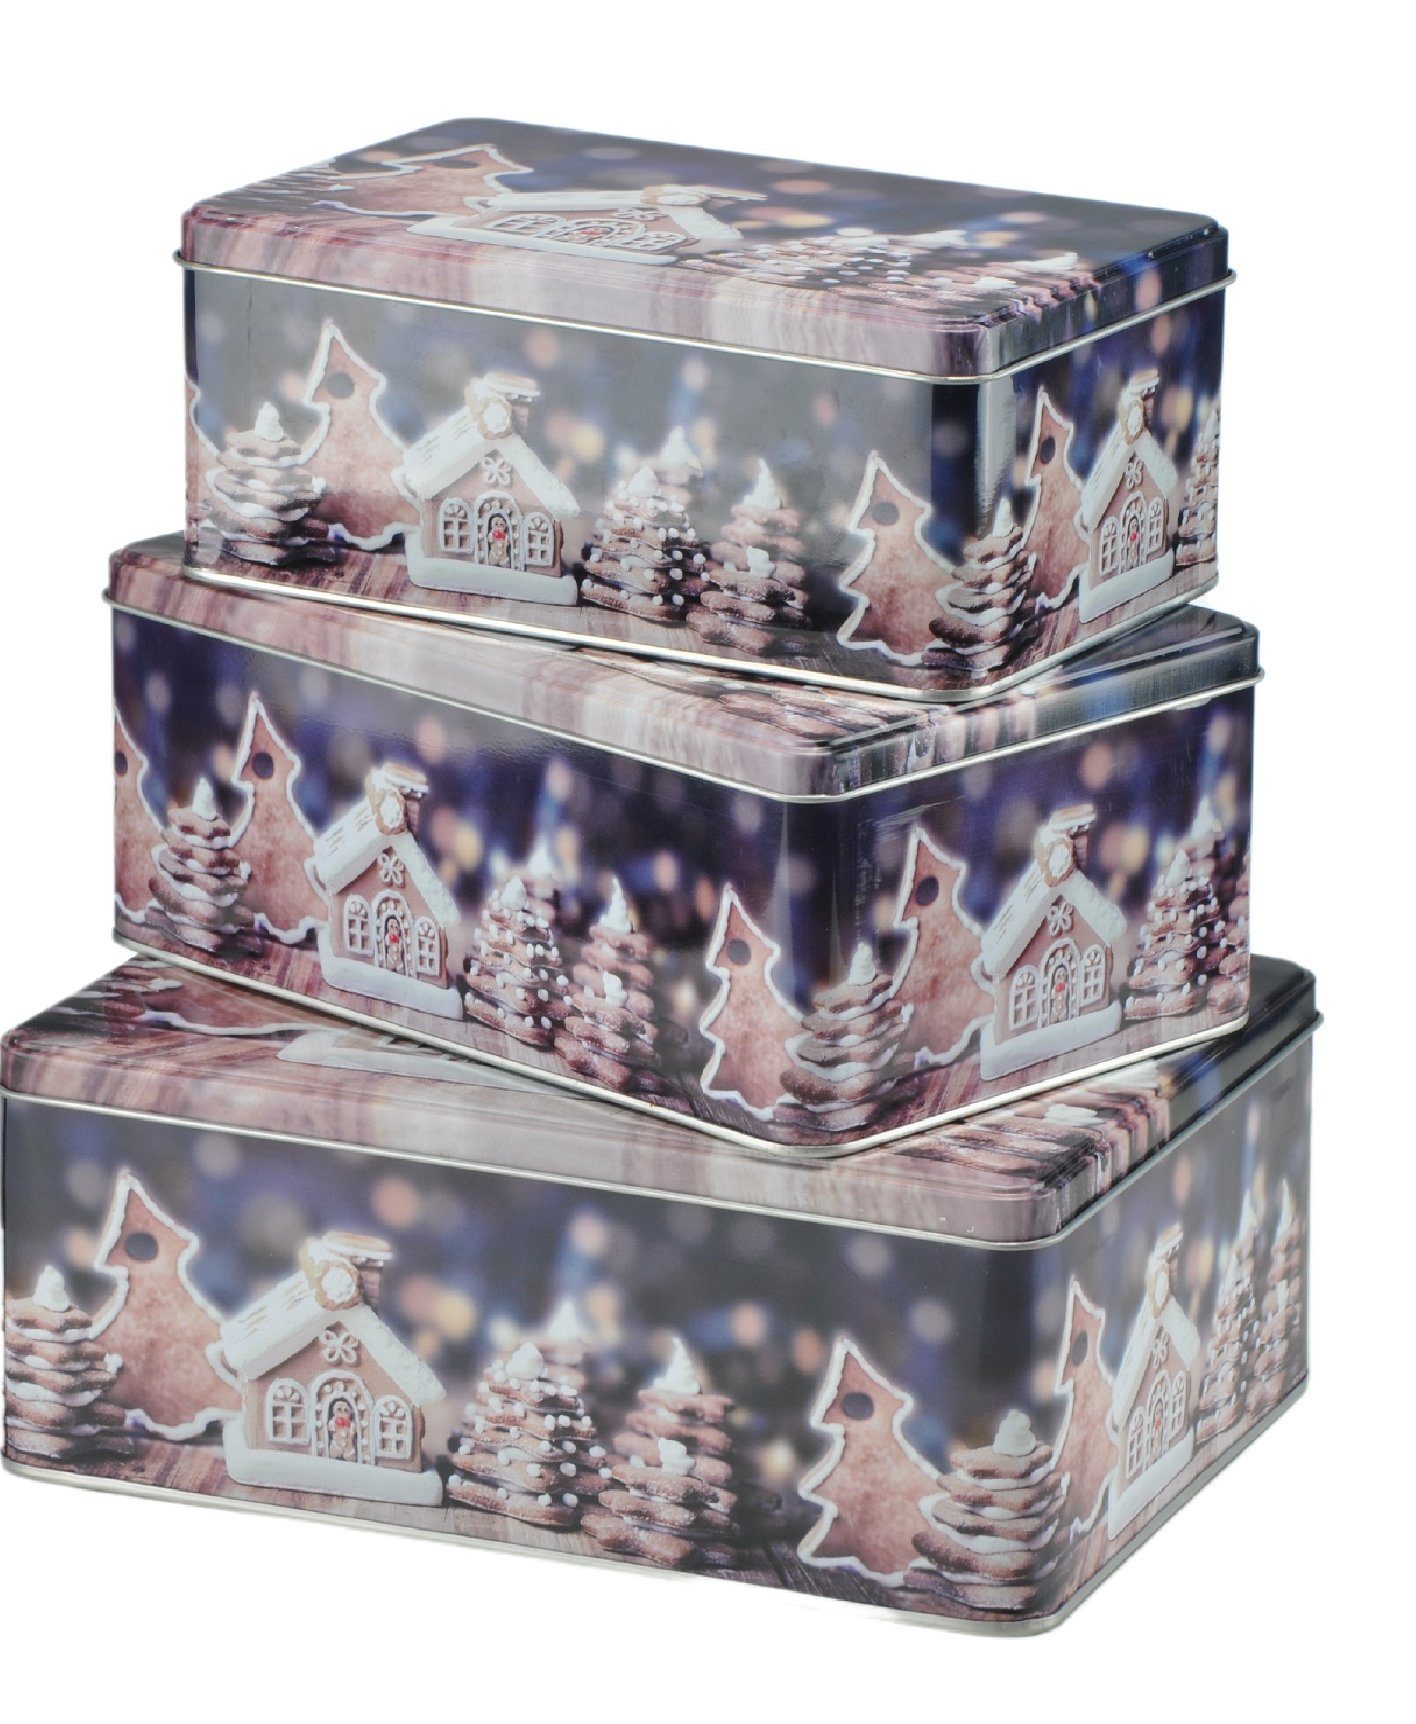 Rungassi Keksdose Weihnachts-Keksdosen Plätzchendosen Dosen 3er Set rechteckig Farbe: Dunklblau | Keksdosen